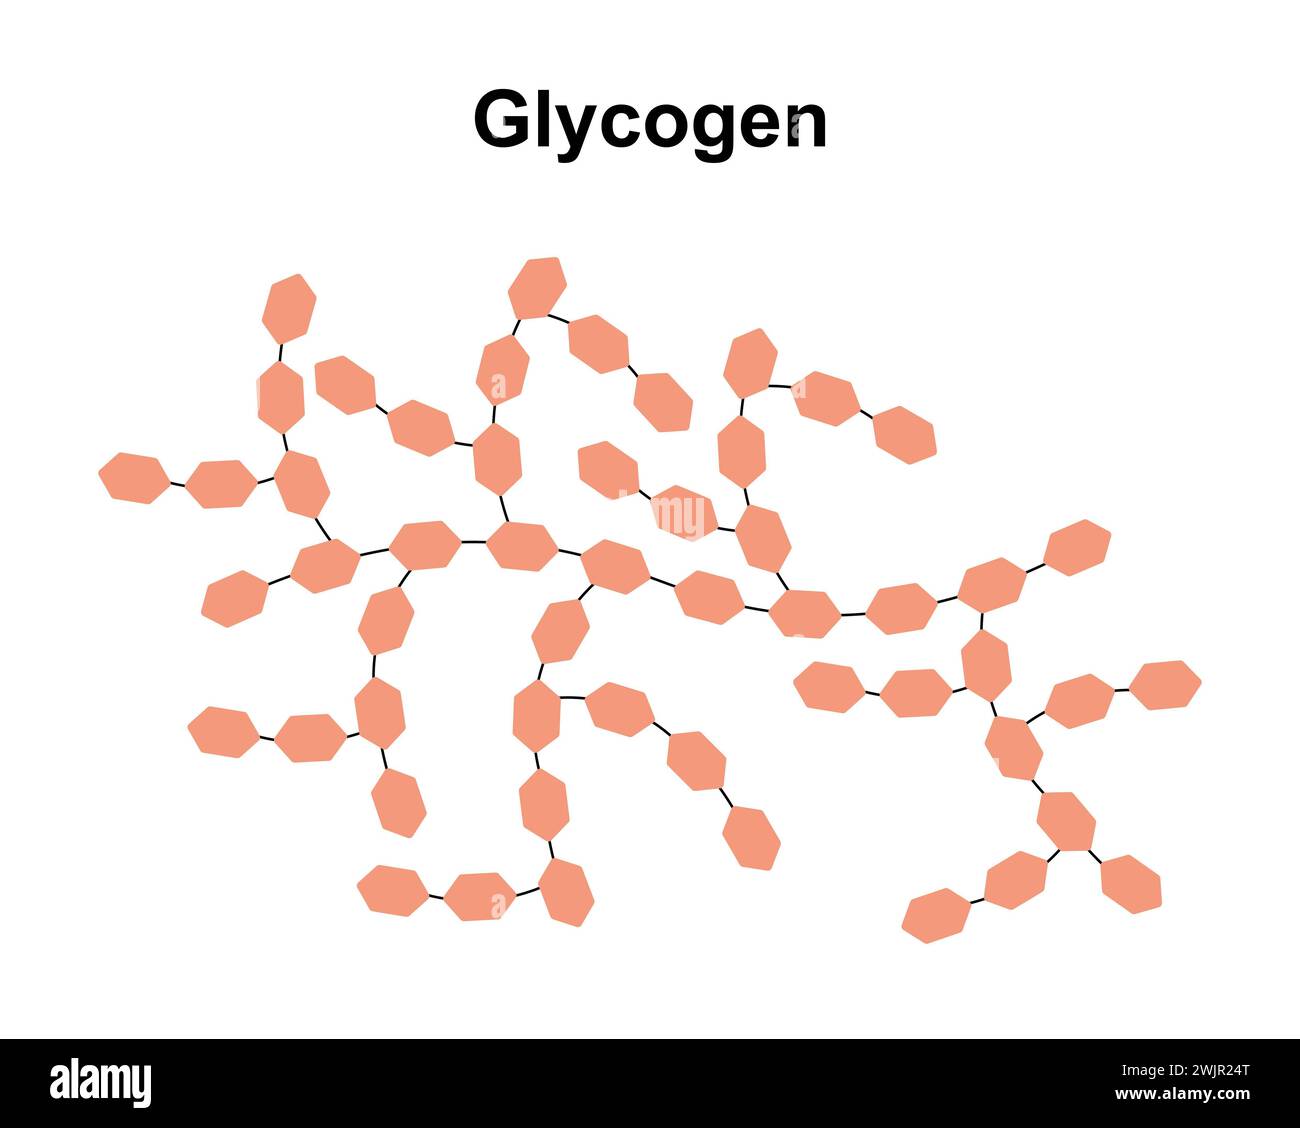 Glycogen sugar molecule, illustration Stock Photo